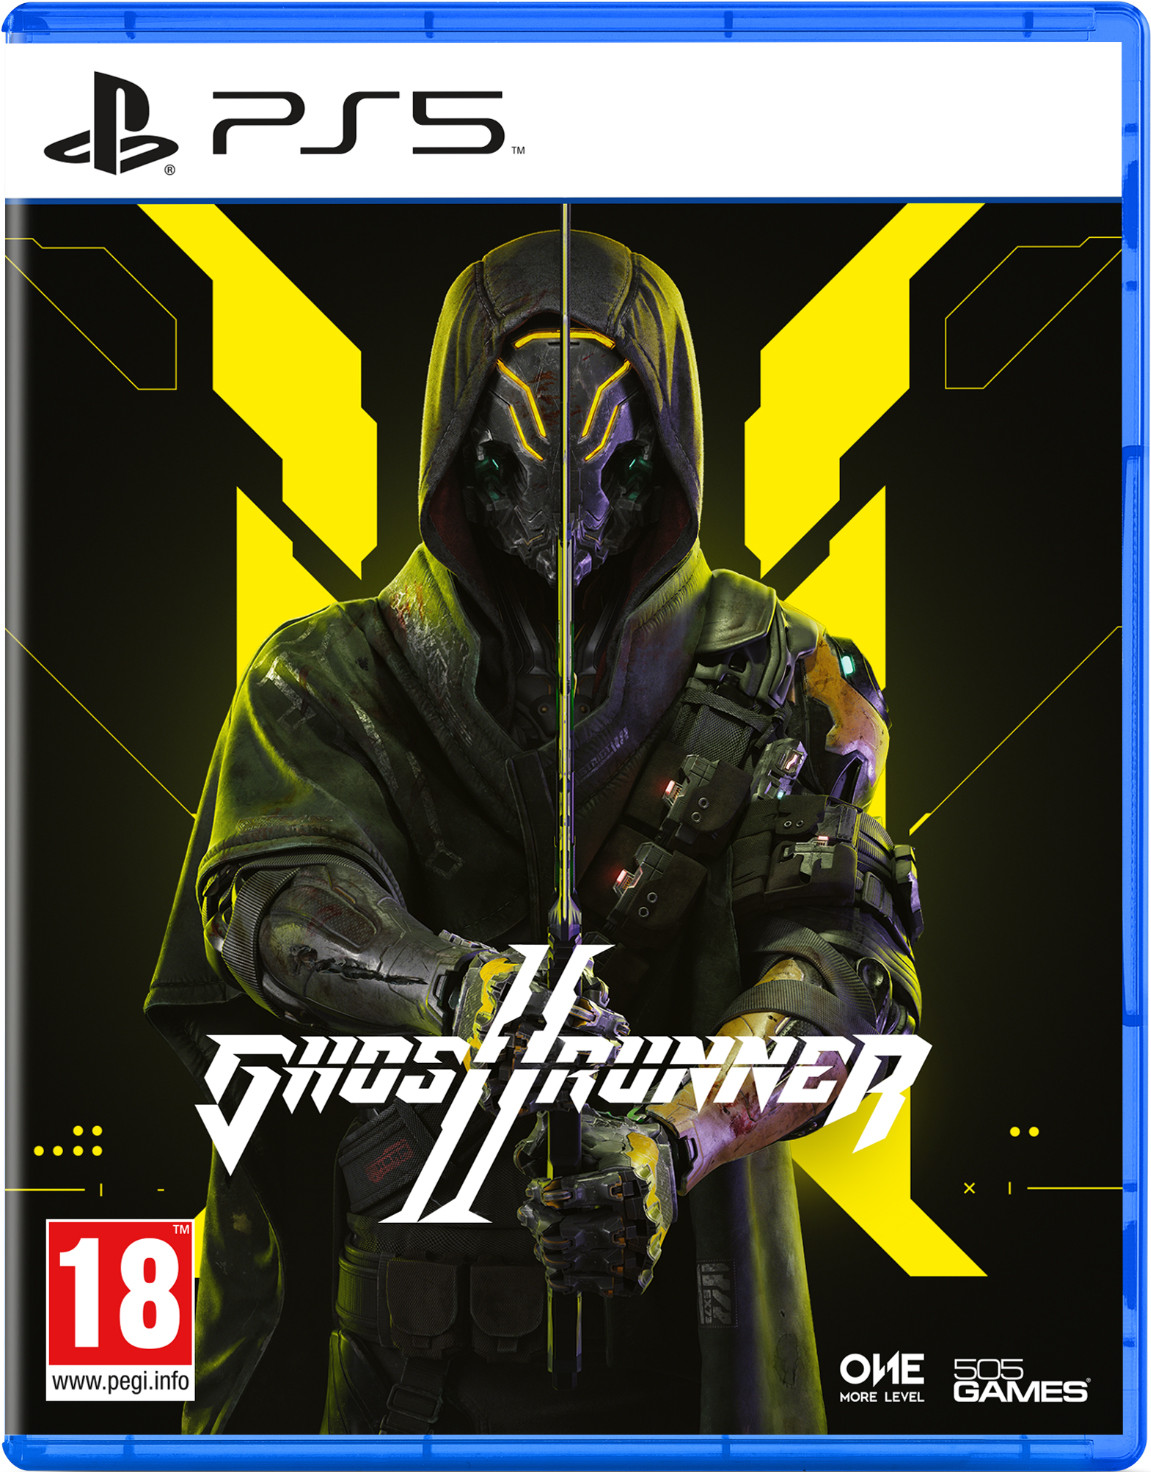 Ghostrunner 2 (PS5), 505 Games